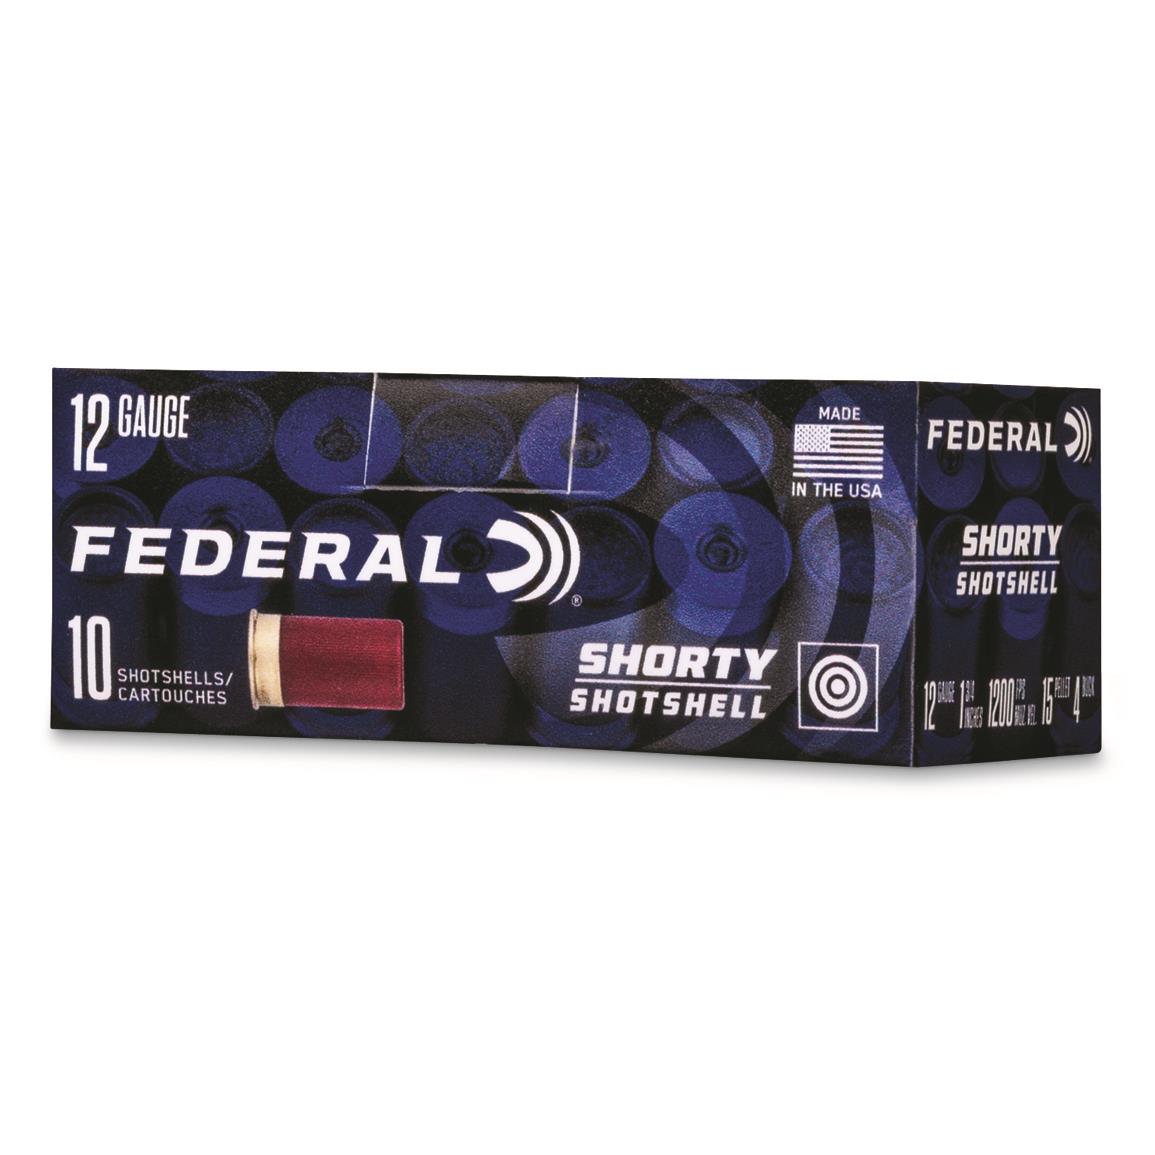 Federal Shorty Shotshells, 12 Gauge, 1 3/4", 1-oz. Rifled Slug, 10 Rounds